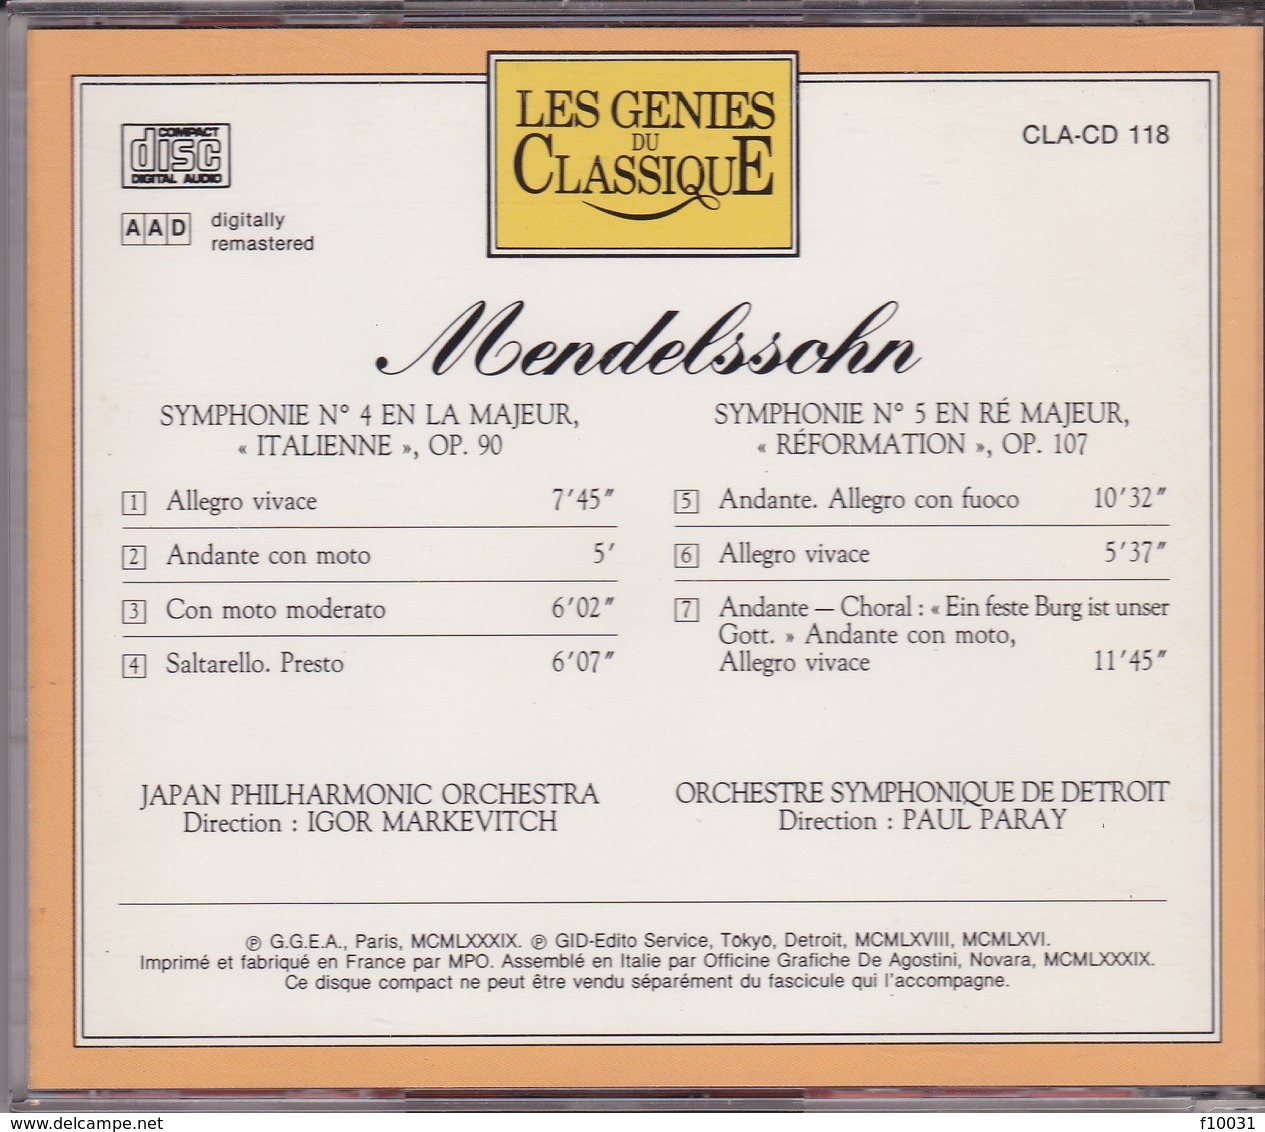 Mendelssohn - Classical